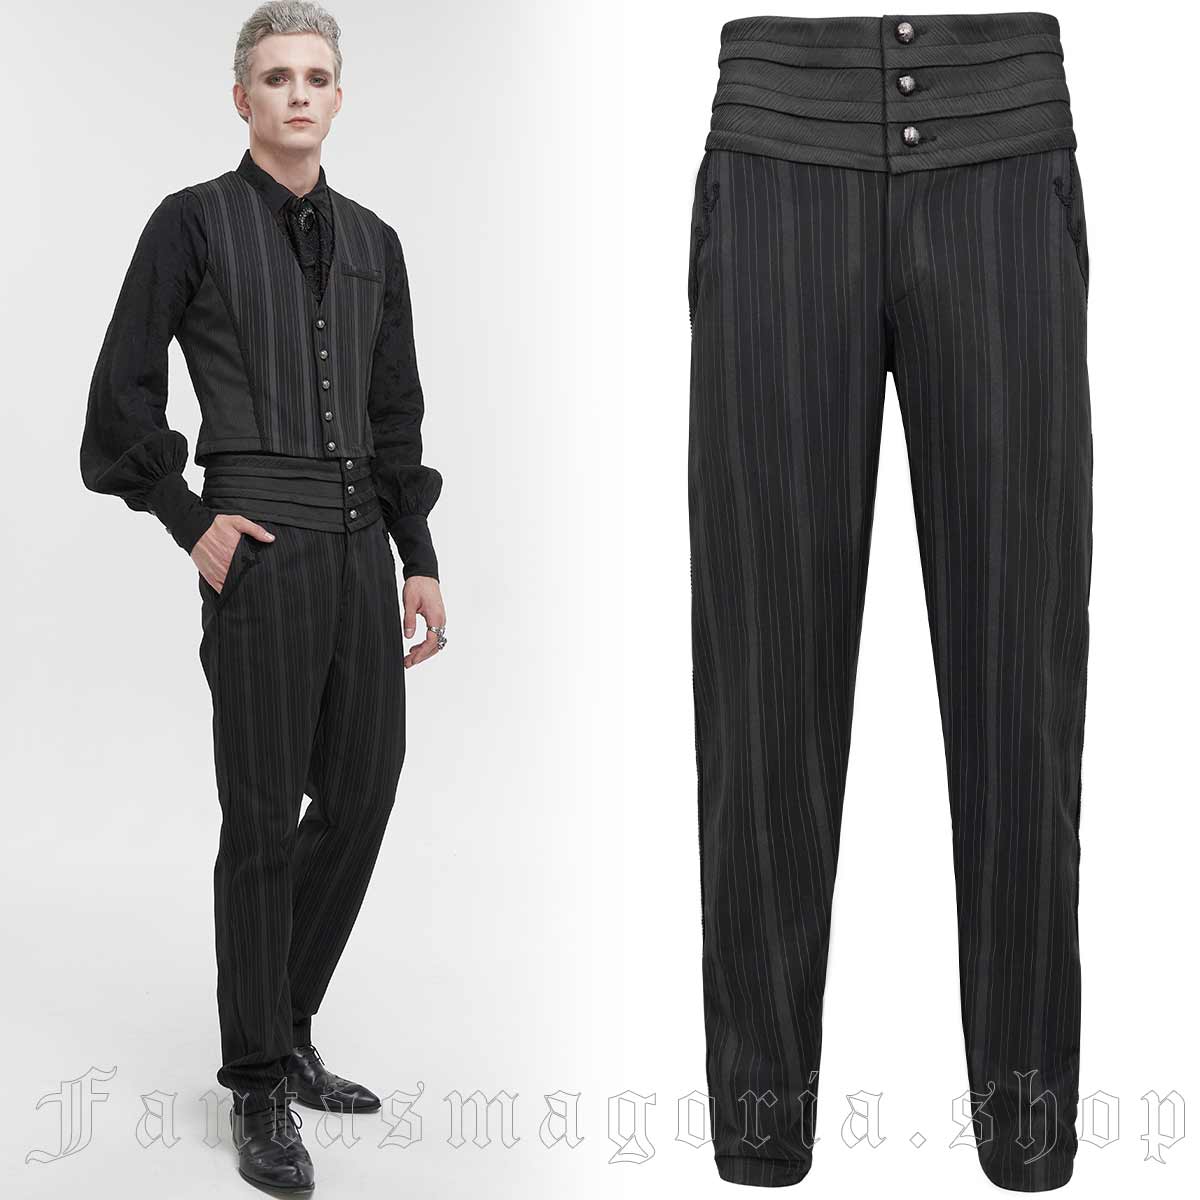 Men's Gothic classic black and gray striped slim-fit trousers. - Devil Fashion - PT18901